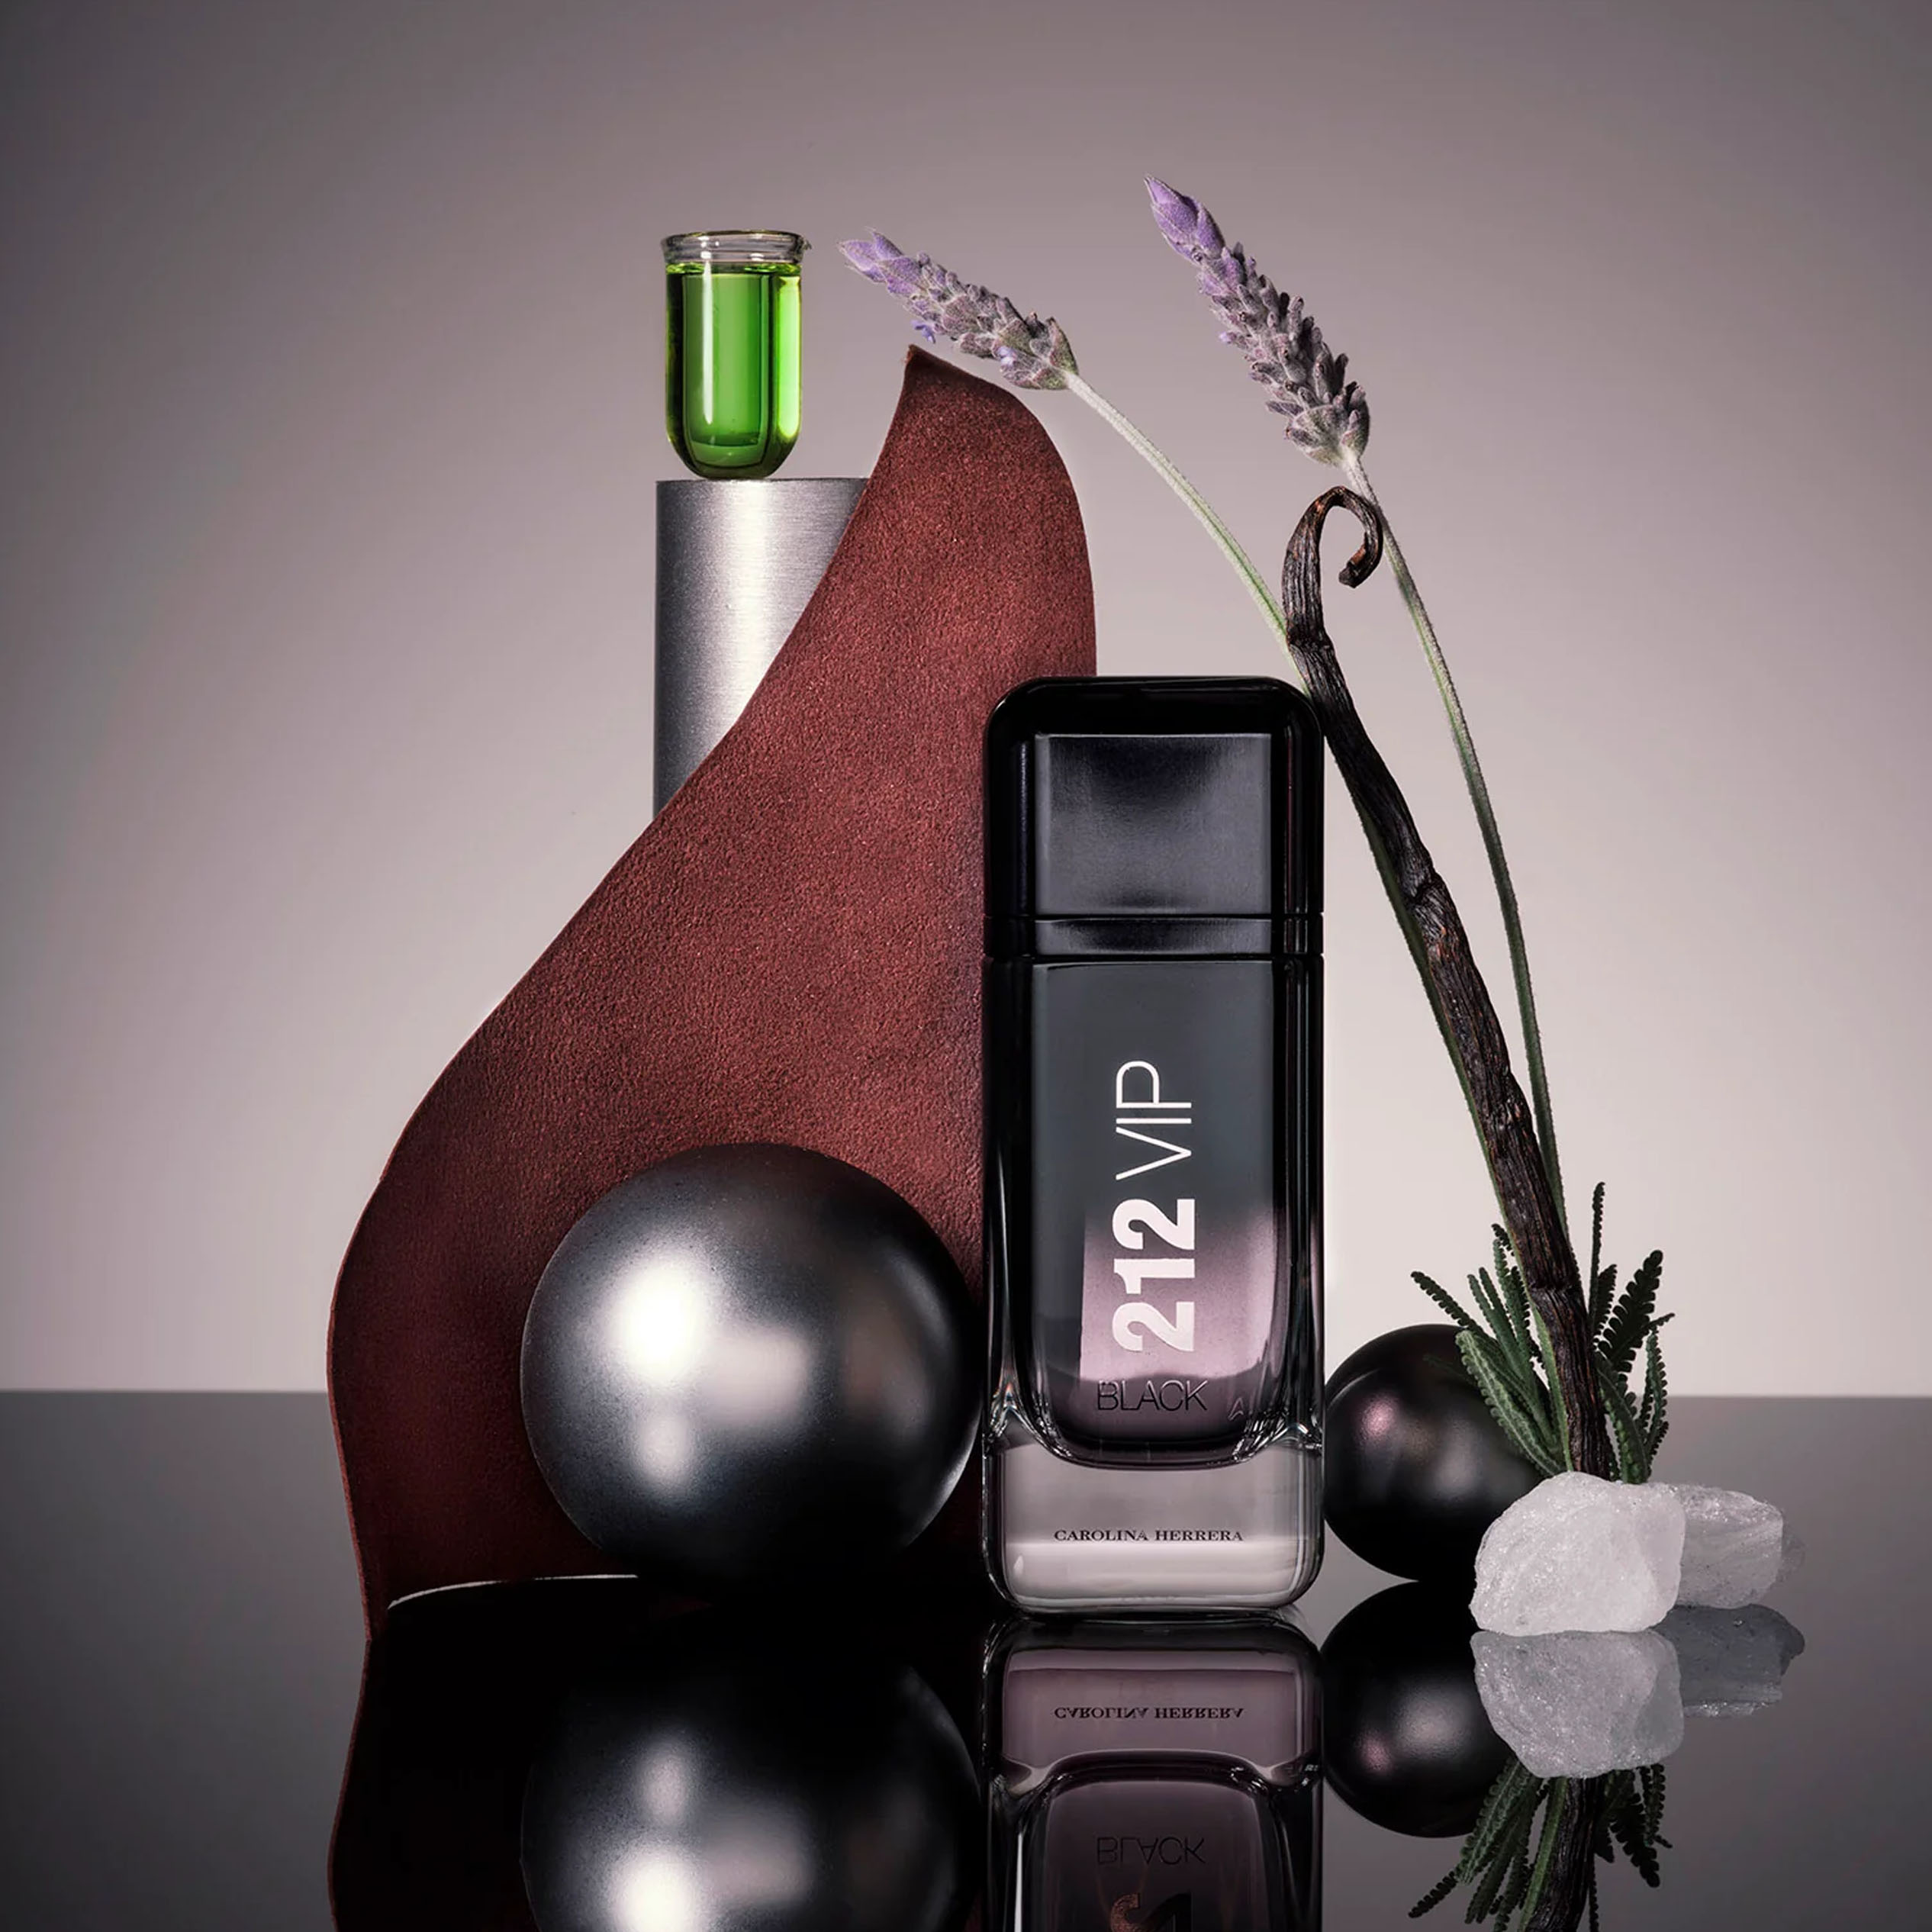 Perfume 212 Vip Black Carolina Herrera    (Replica Con Fragancia Importada)- Hombre